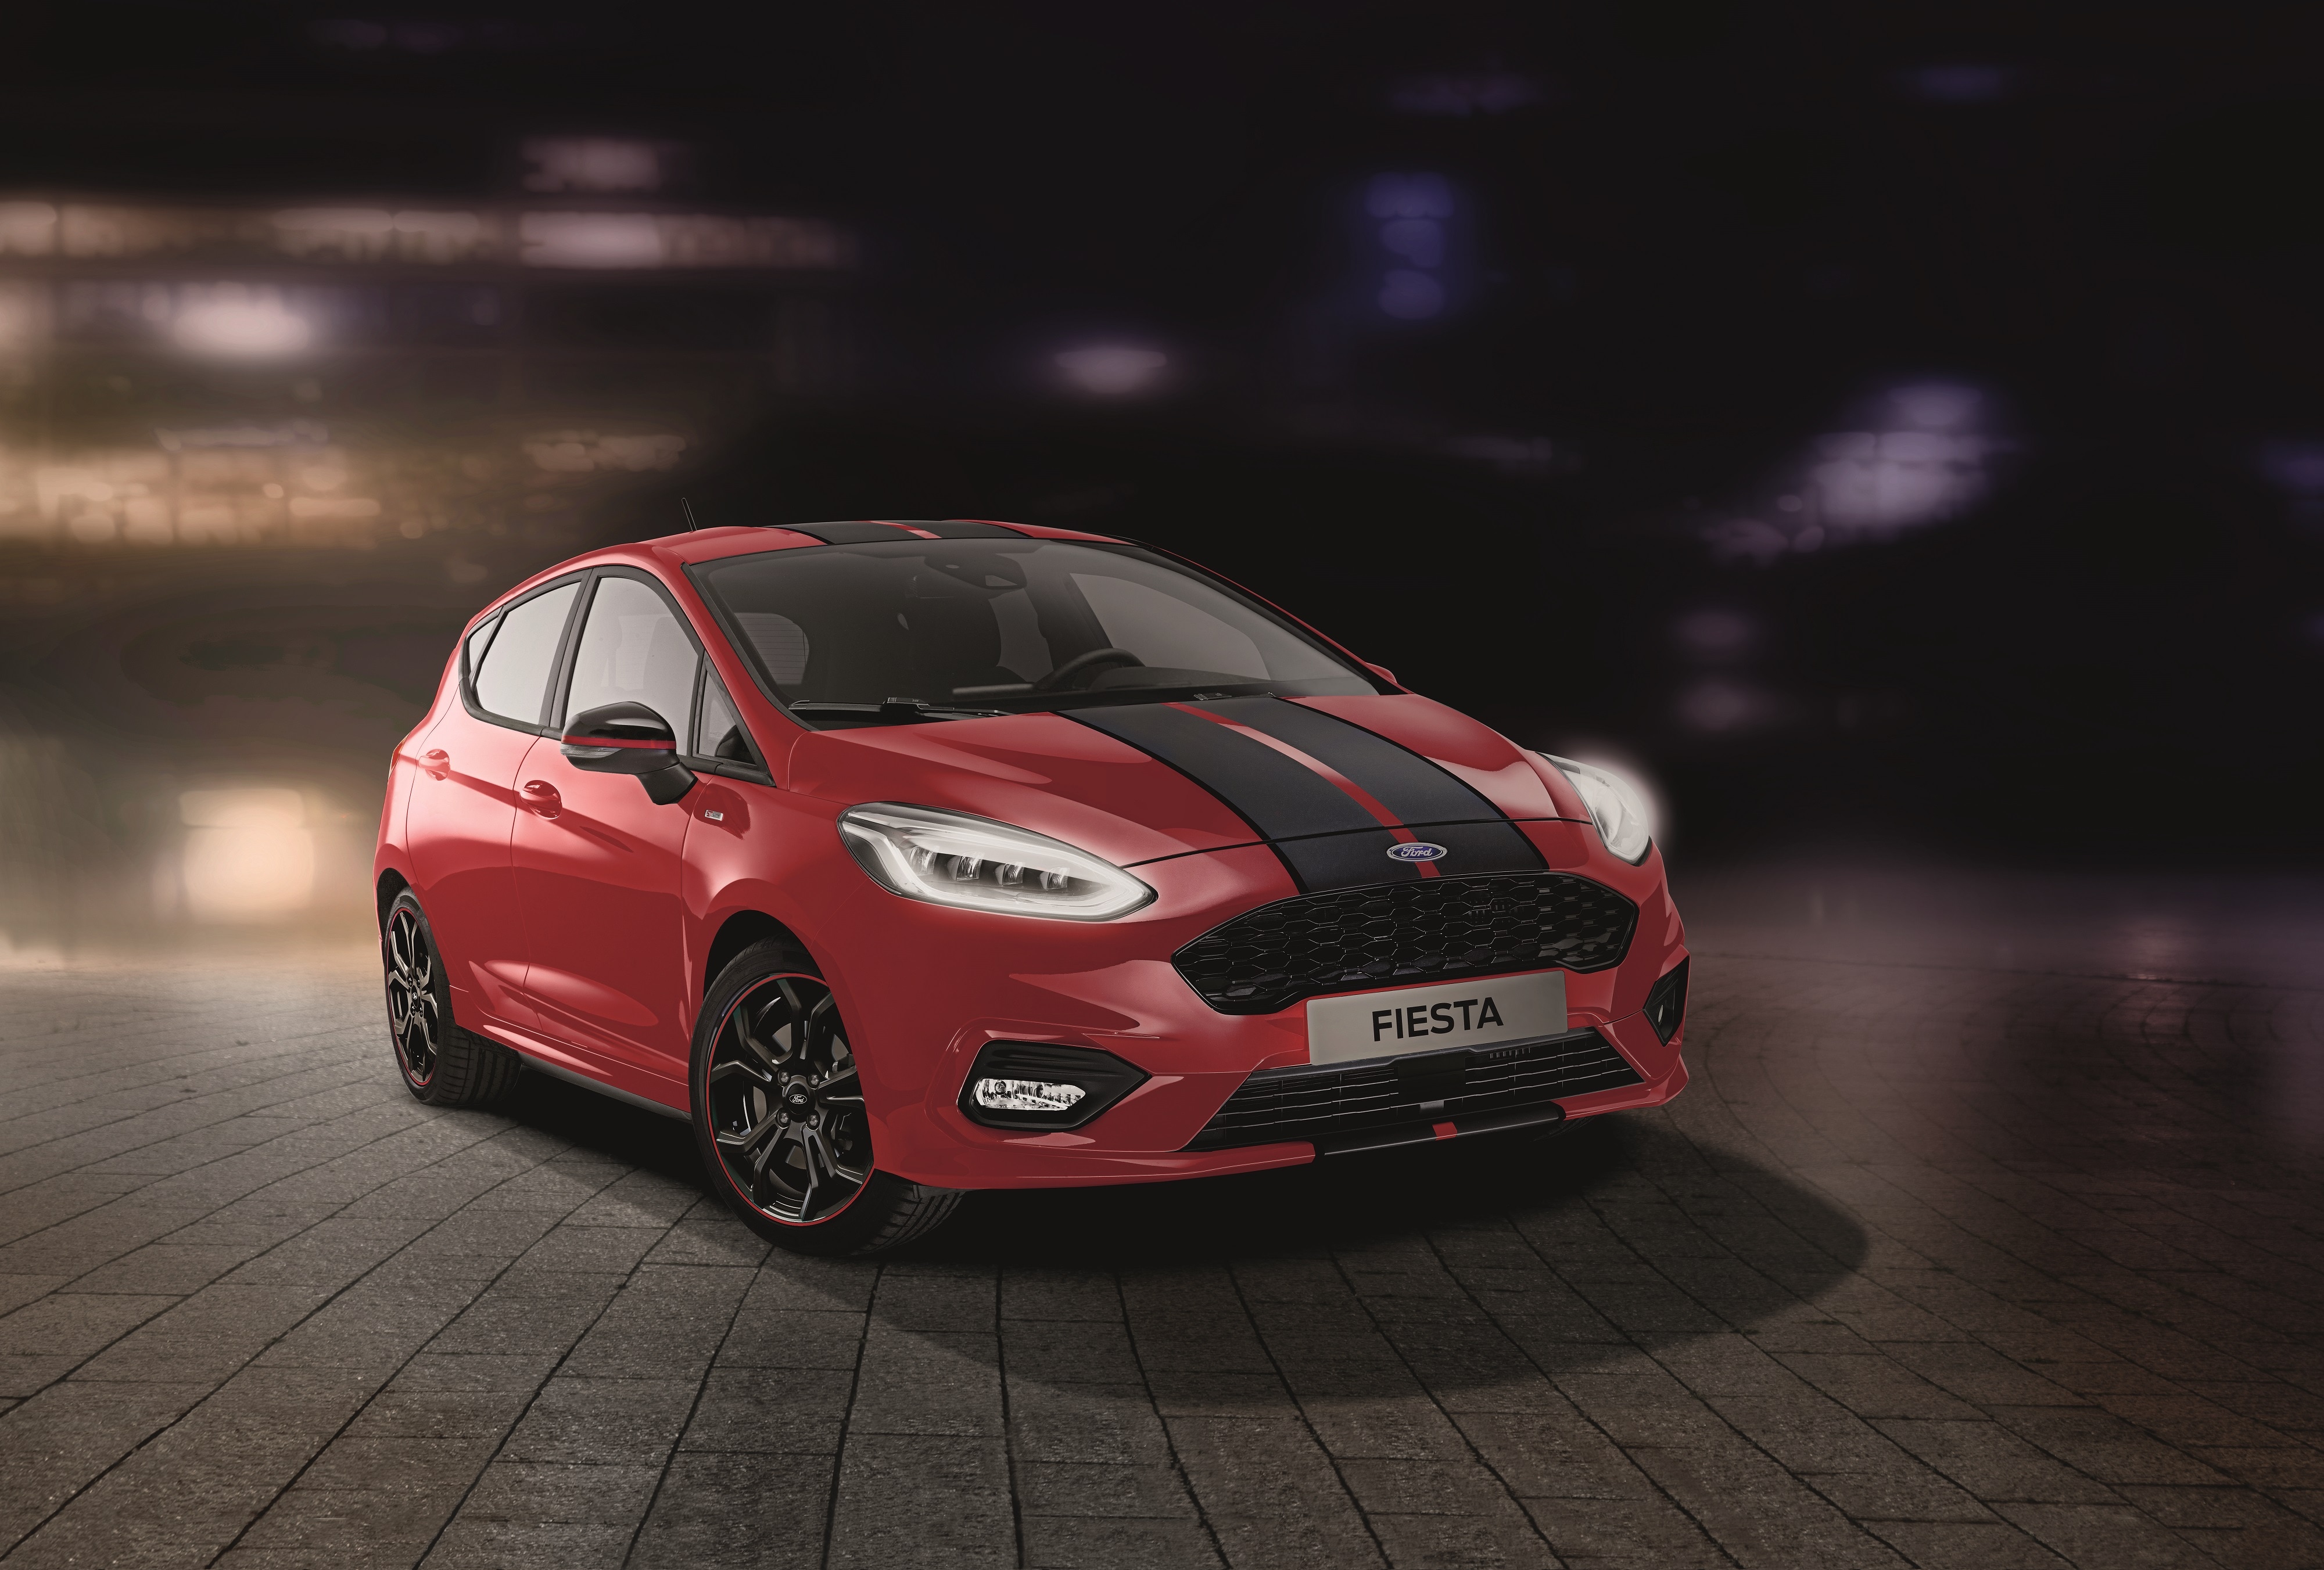 Neues Sondermodell in Rennsportoptik: Ford Fiesta Champ